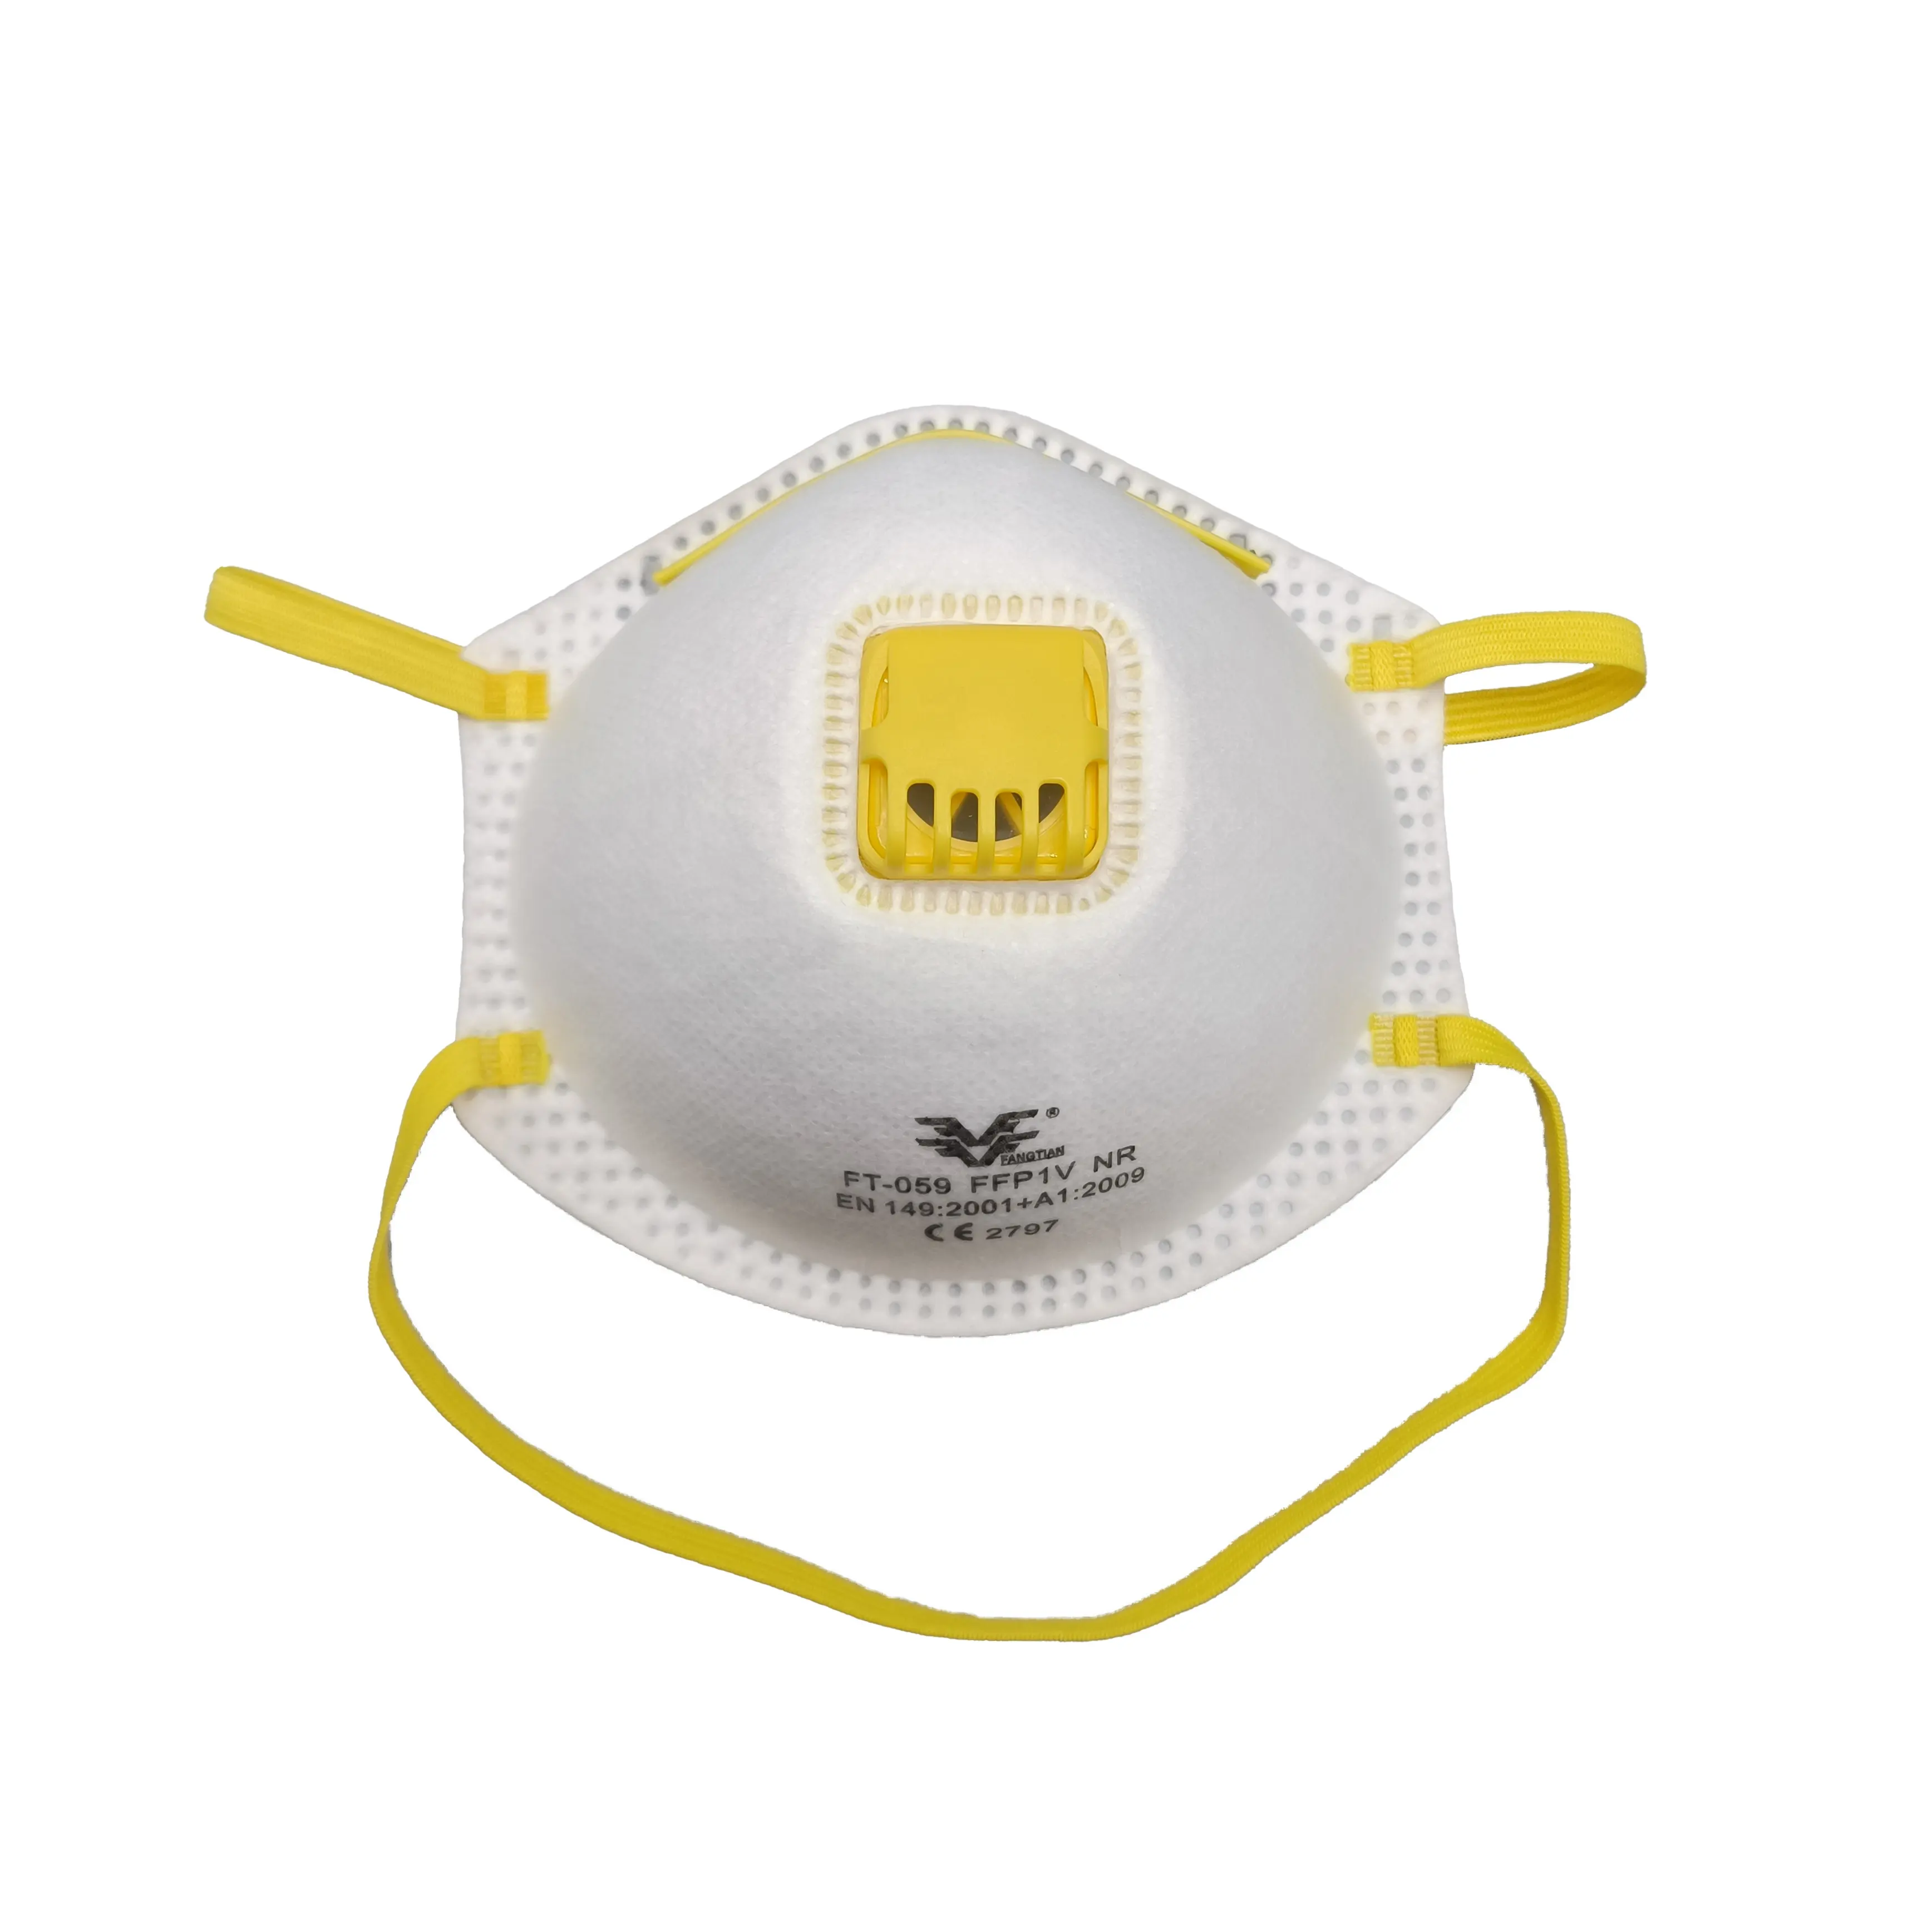 Máscara antipolvo con logotipo personalizado blanco CE FFP1 NR FFP1 máscara antipolvo con válvula respirador/válvula de exhalación